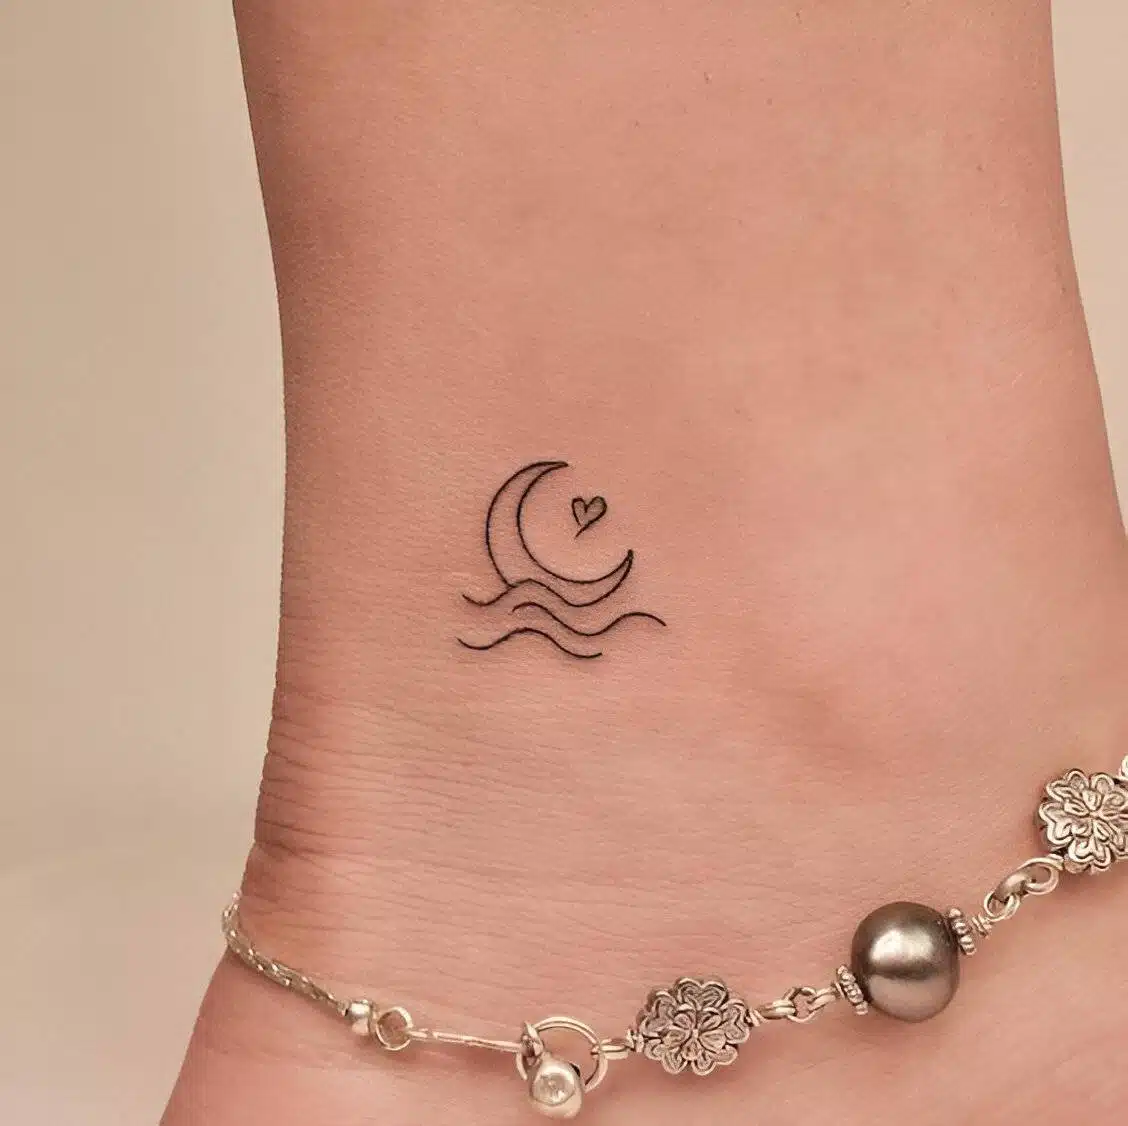 25 Feminine Tattoo Ideas That Are Small But Oh So Pretty - 187